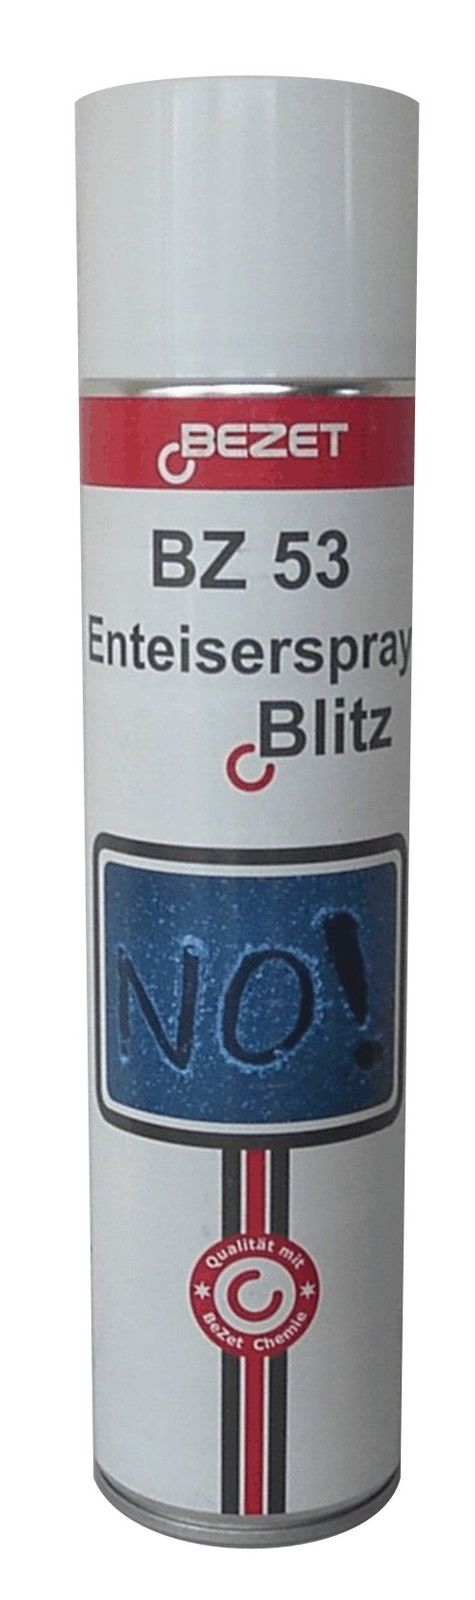 Enteiserspray Blitz - BZ 53